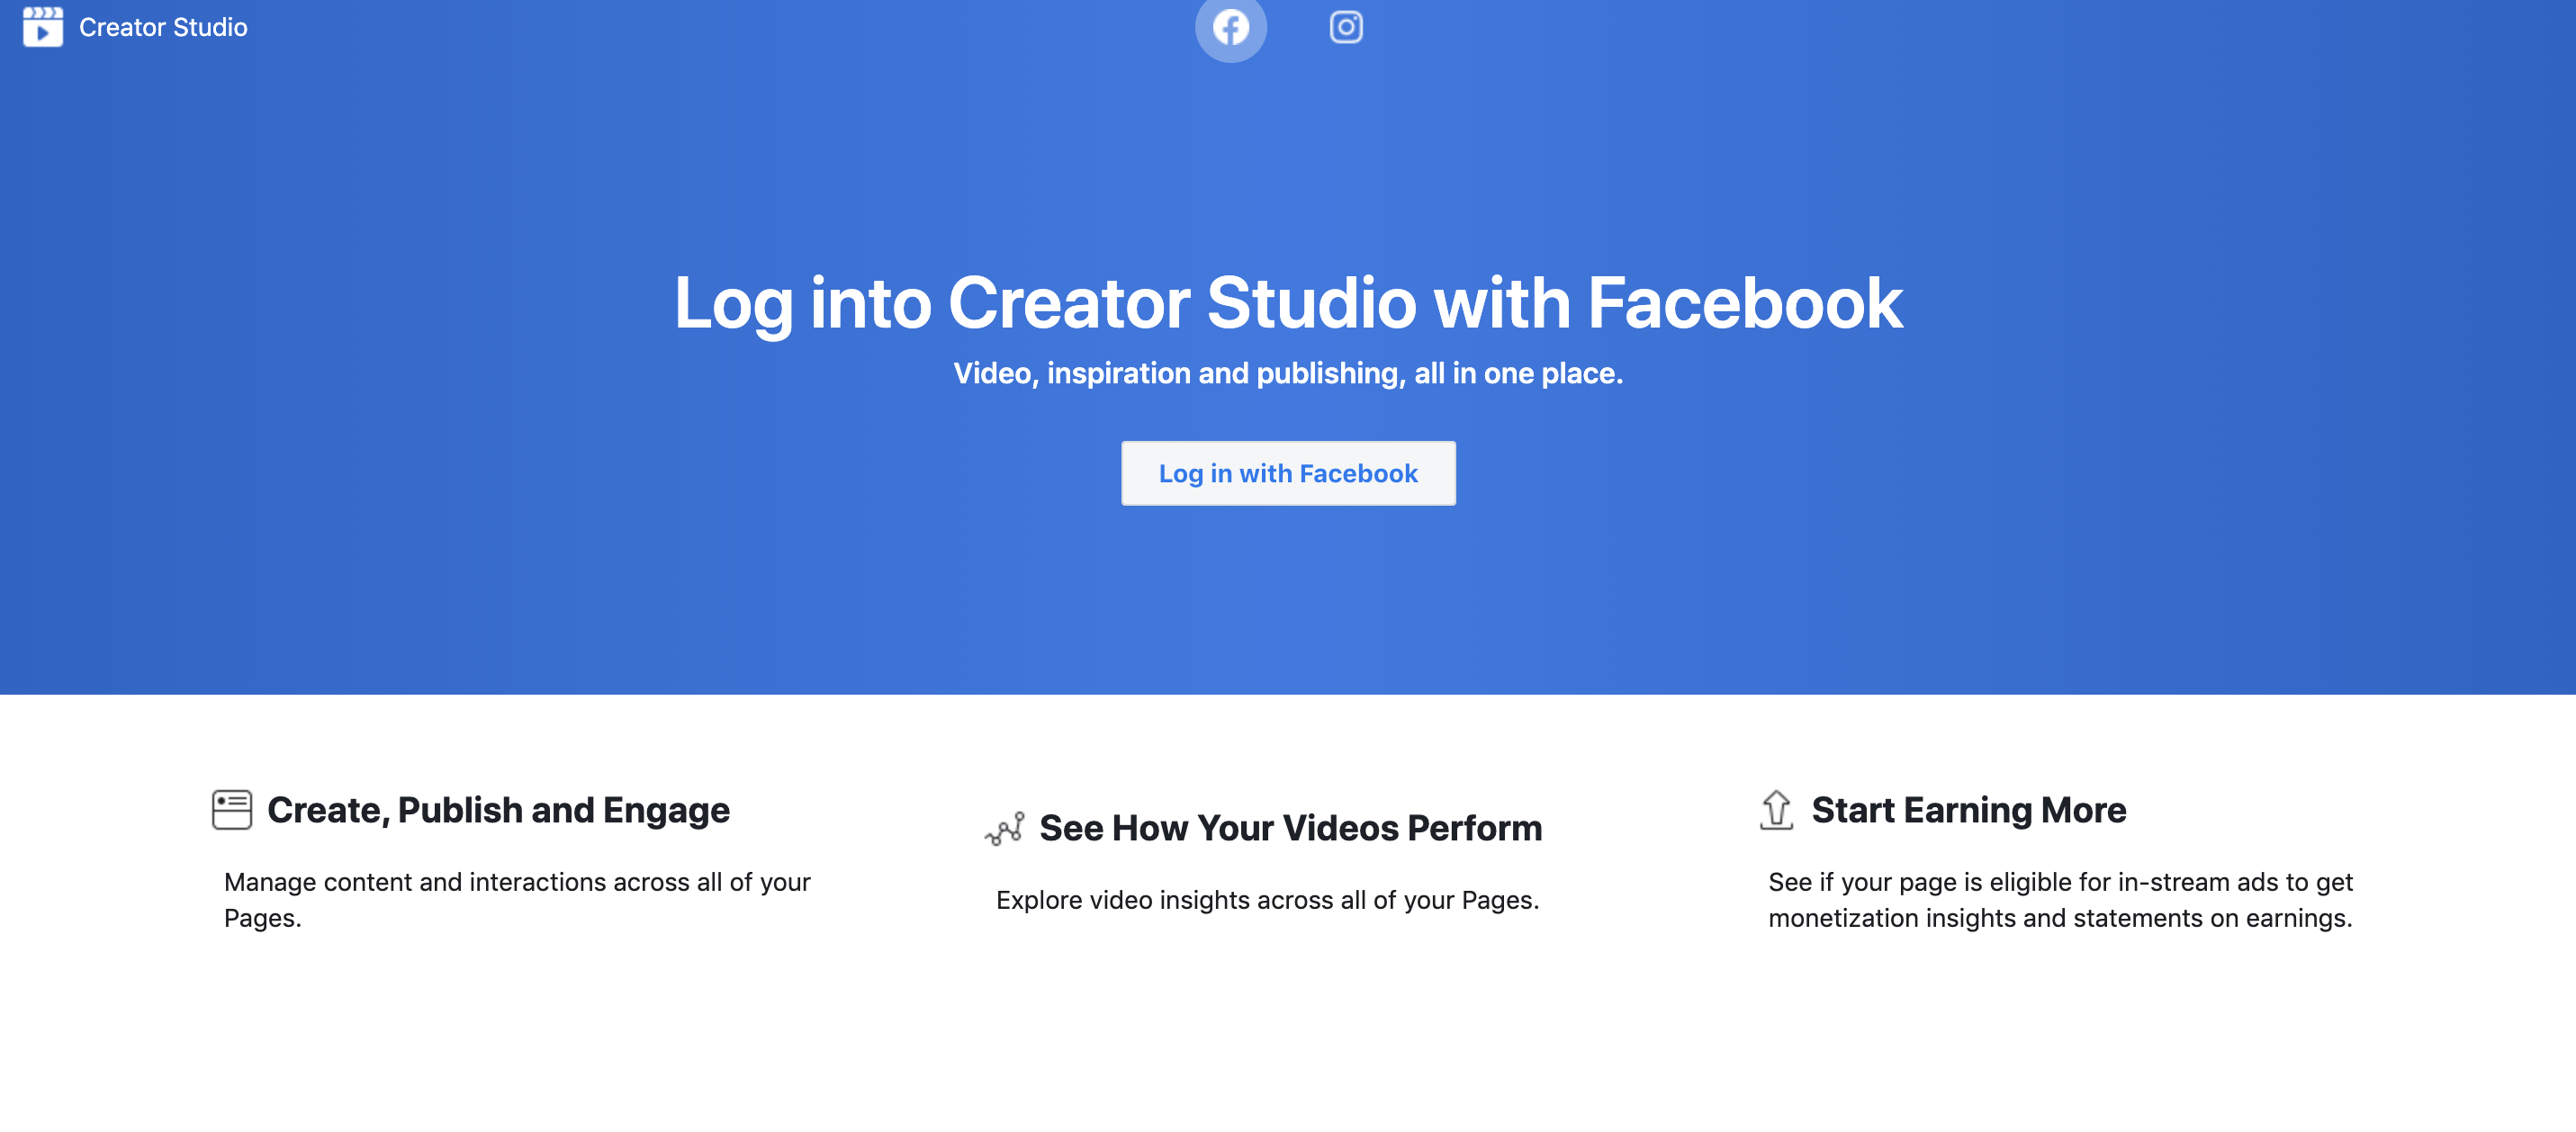 log into creator studio with facebook